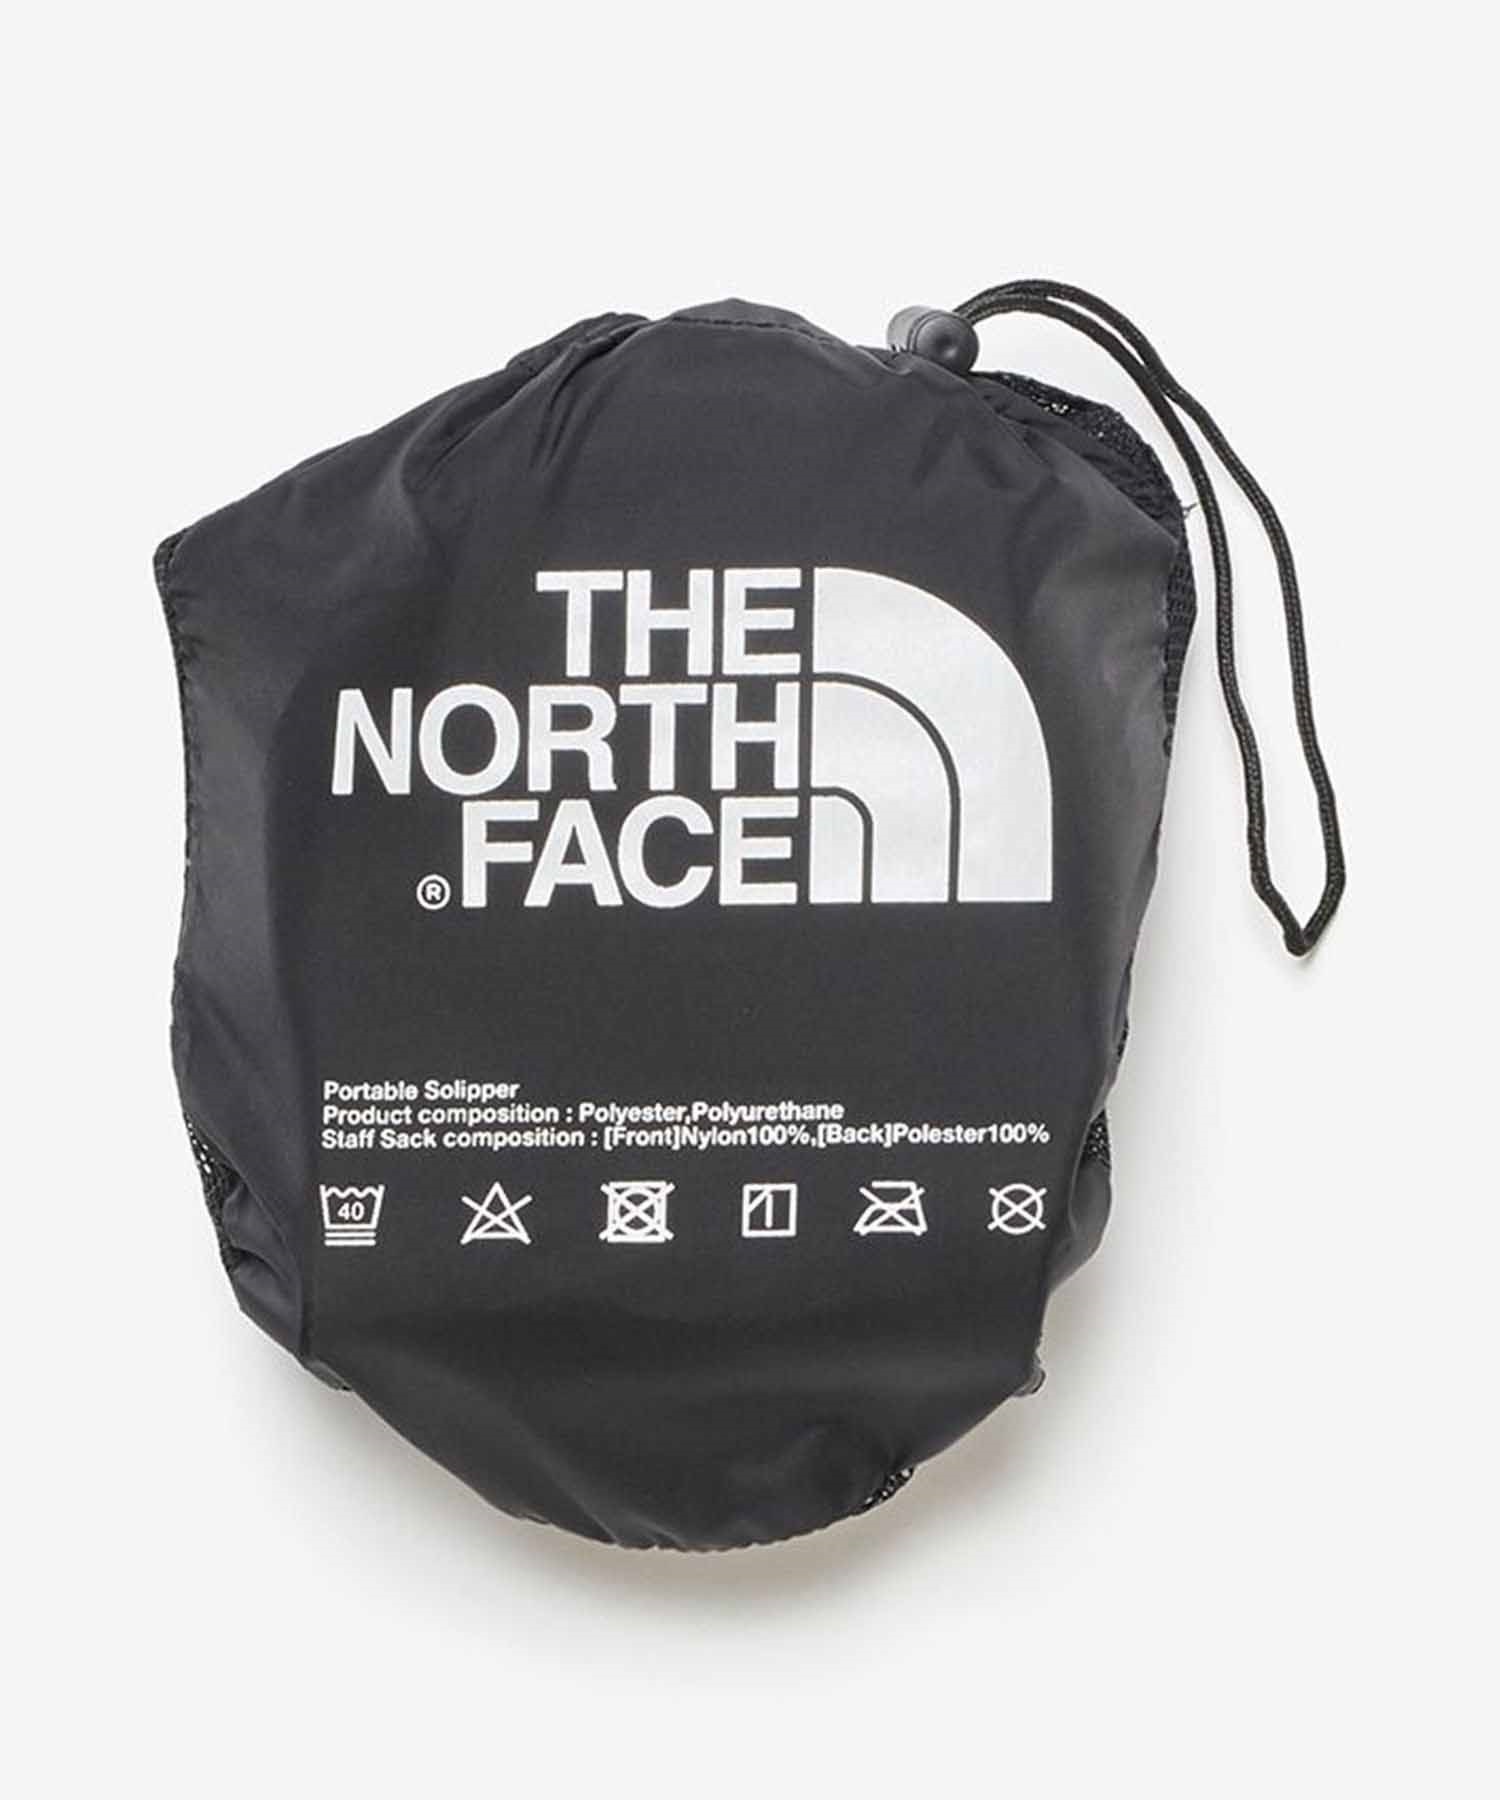 THE NORTH FACE/ザ・ノース・フェイス PORTABLE SOLIPPER ポータブル ソリッパー 靴下 ソックス NN82370(KK-S)